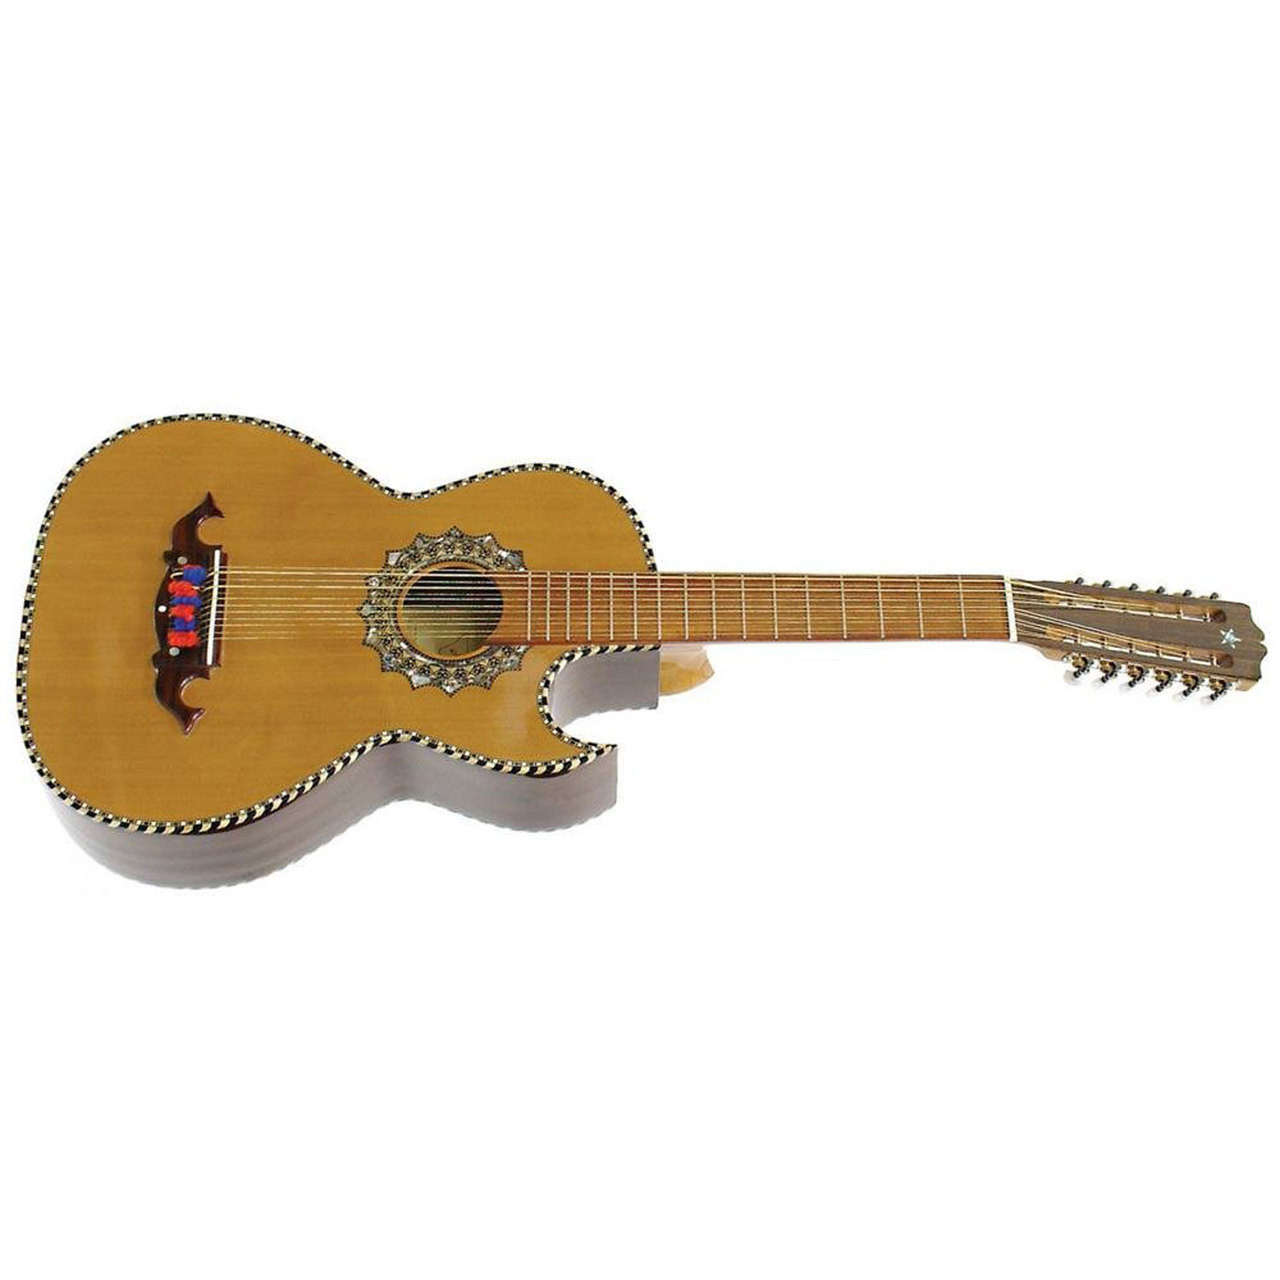 Paracho Elite Presidio 12 String Bajo Sexto Acoustic Guitar With Solid Cedar Top Natural Presidio 2898